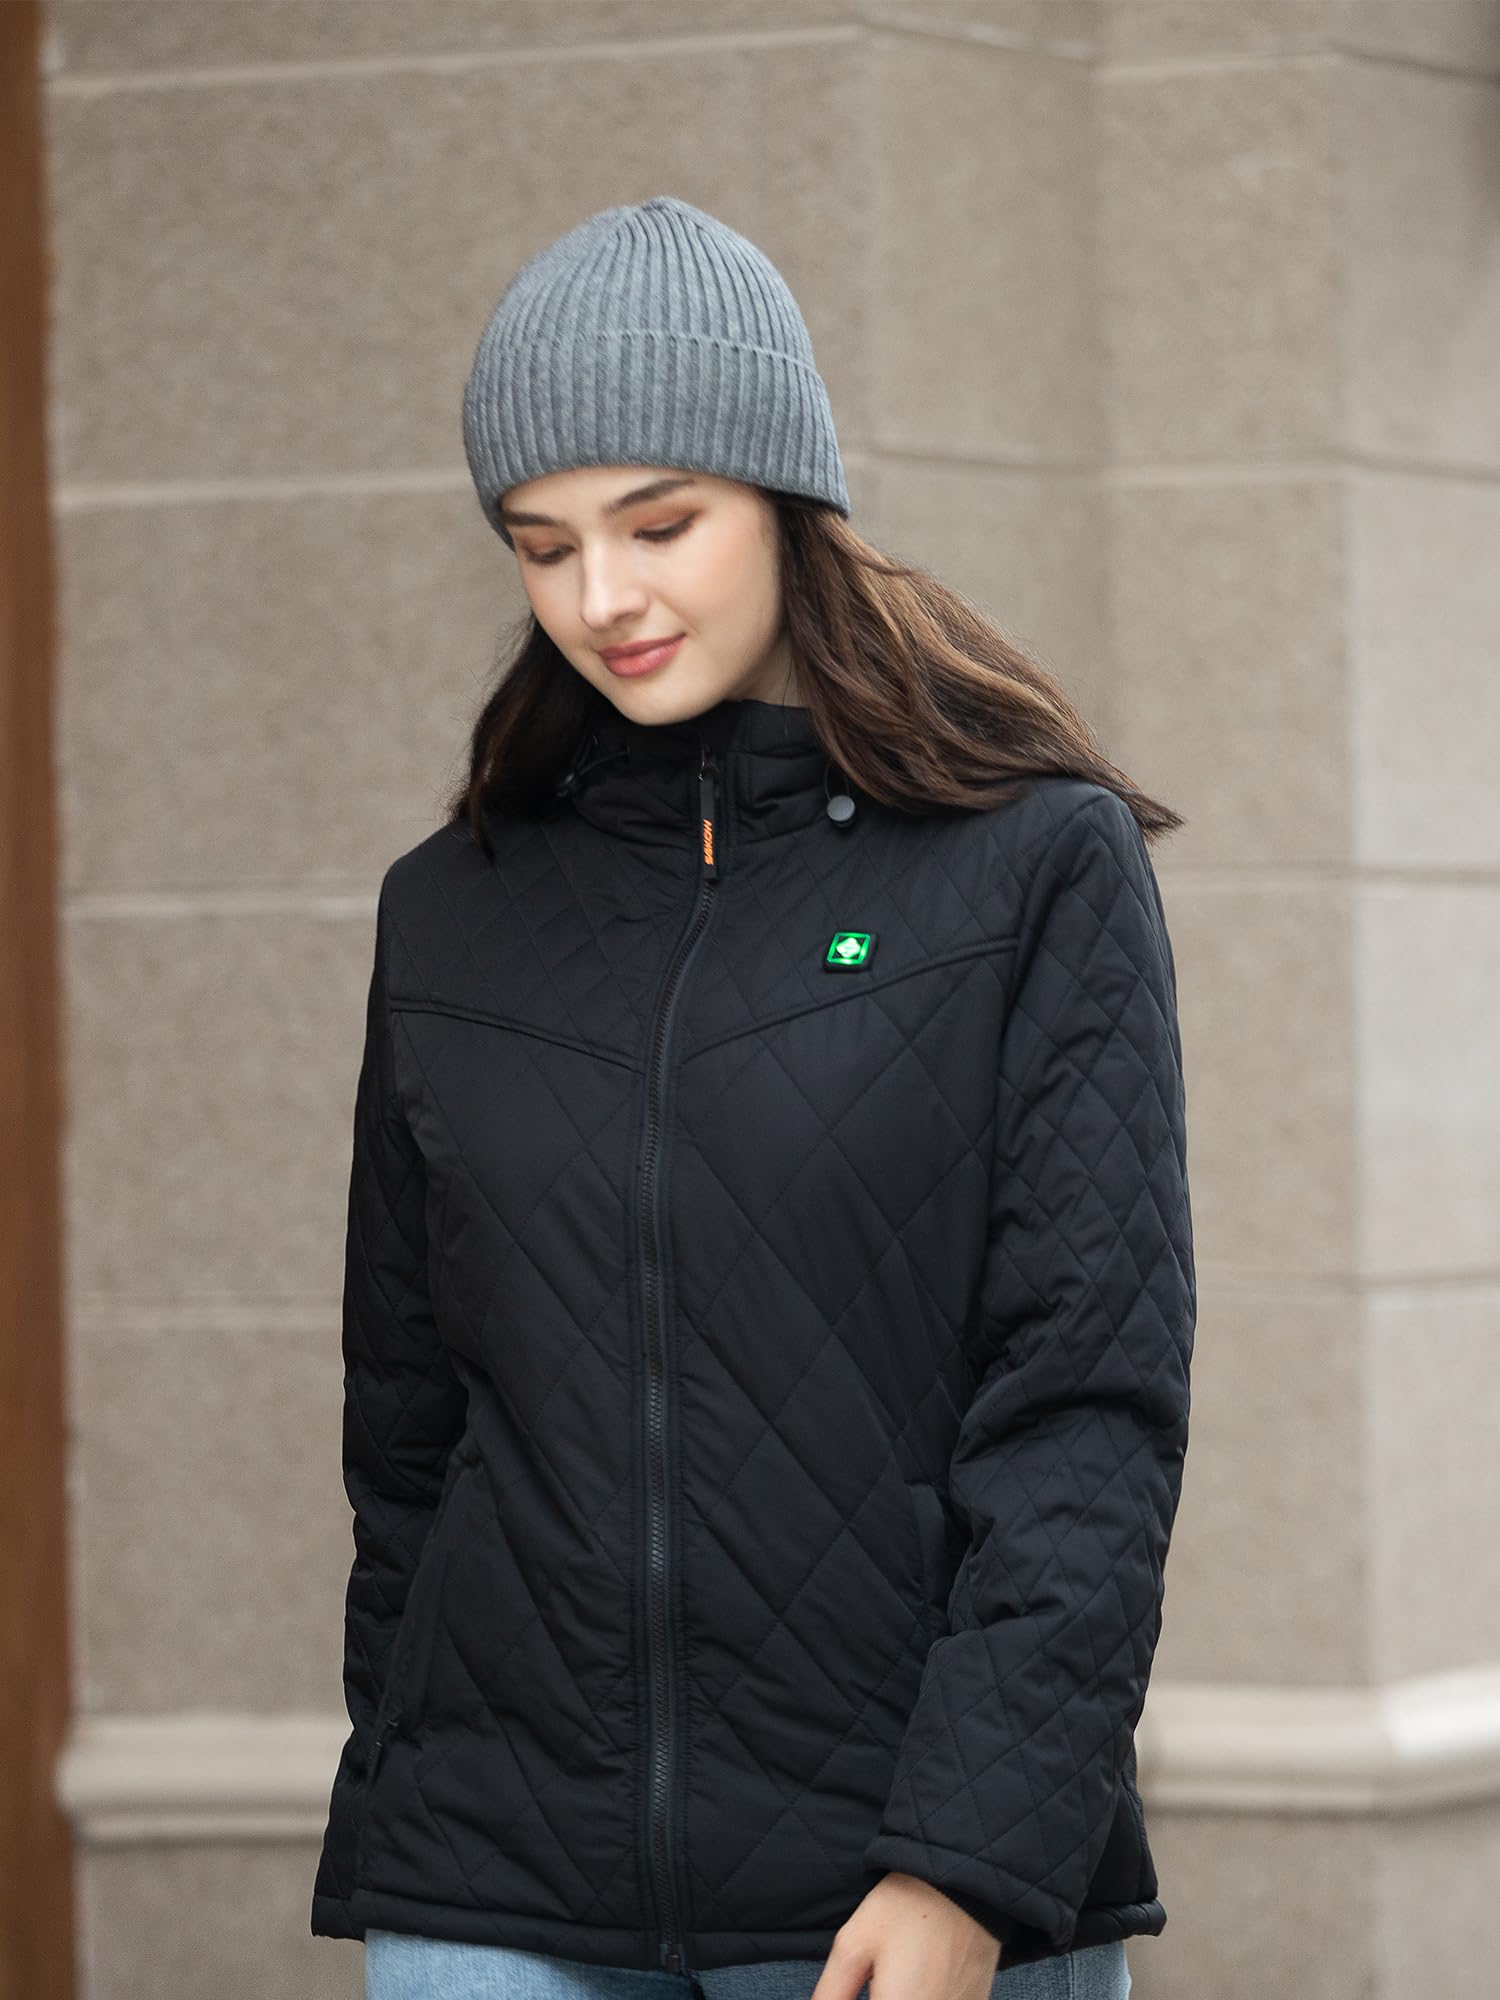 SGKOW Women's Winter Heated Jackets Warming Electric Heated Coat K3